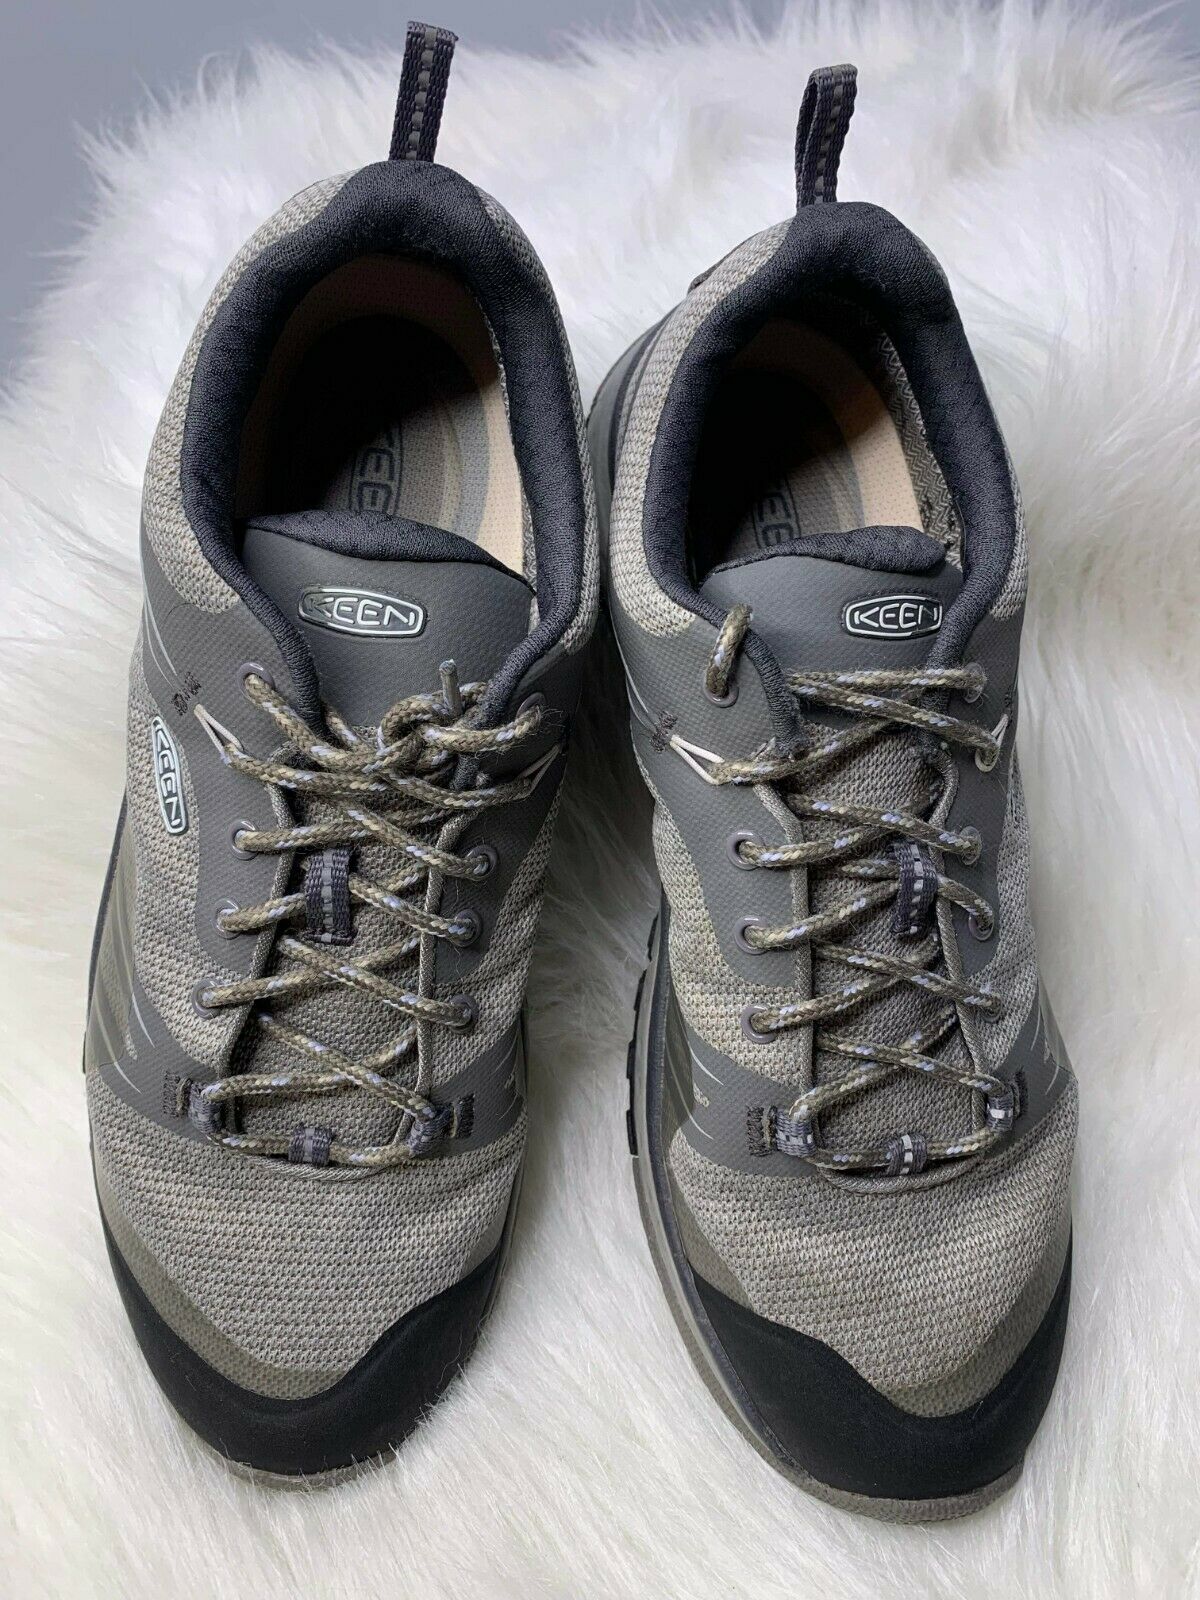 Keen Terradora Hiking Shoes Womens Size 8.5 Gray Waterproof Walking Comfort